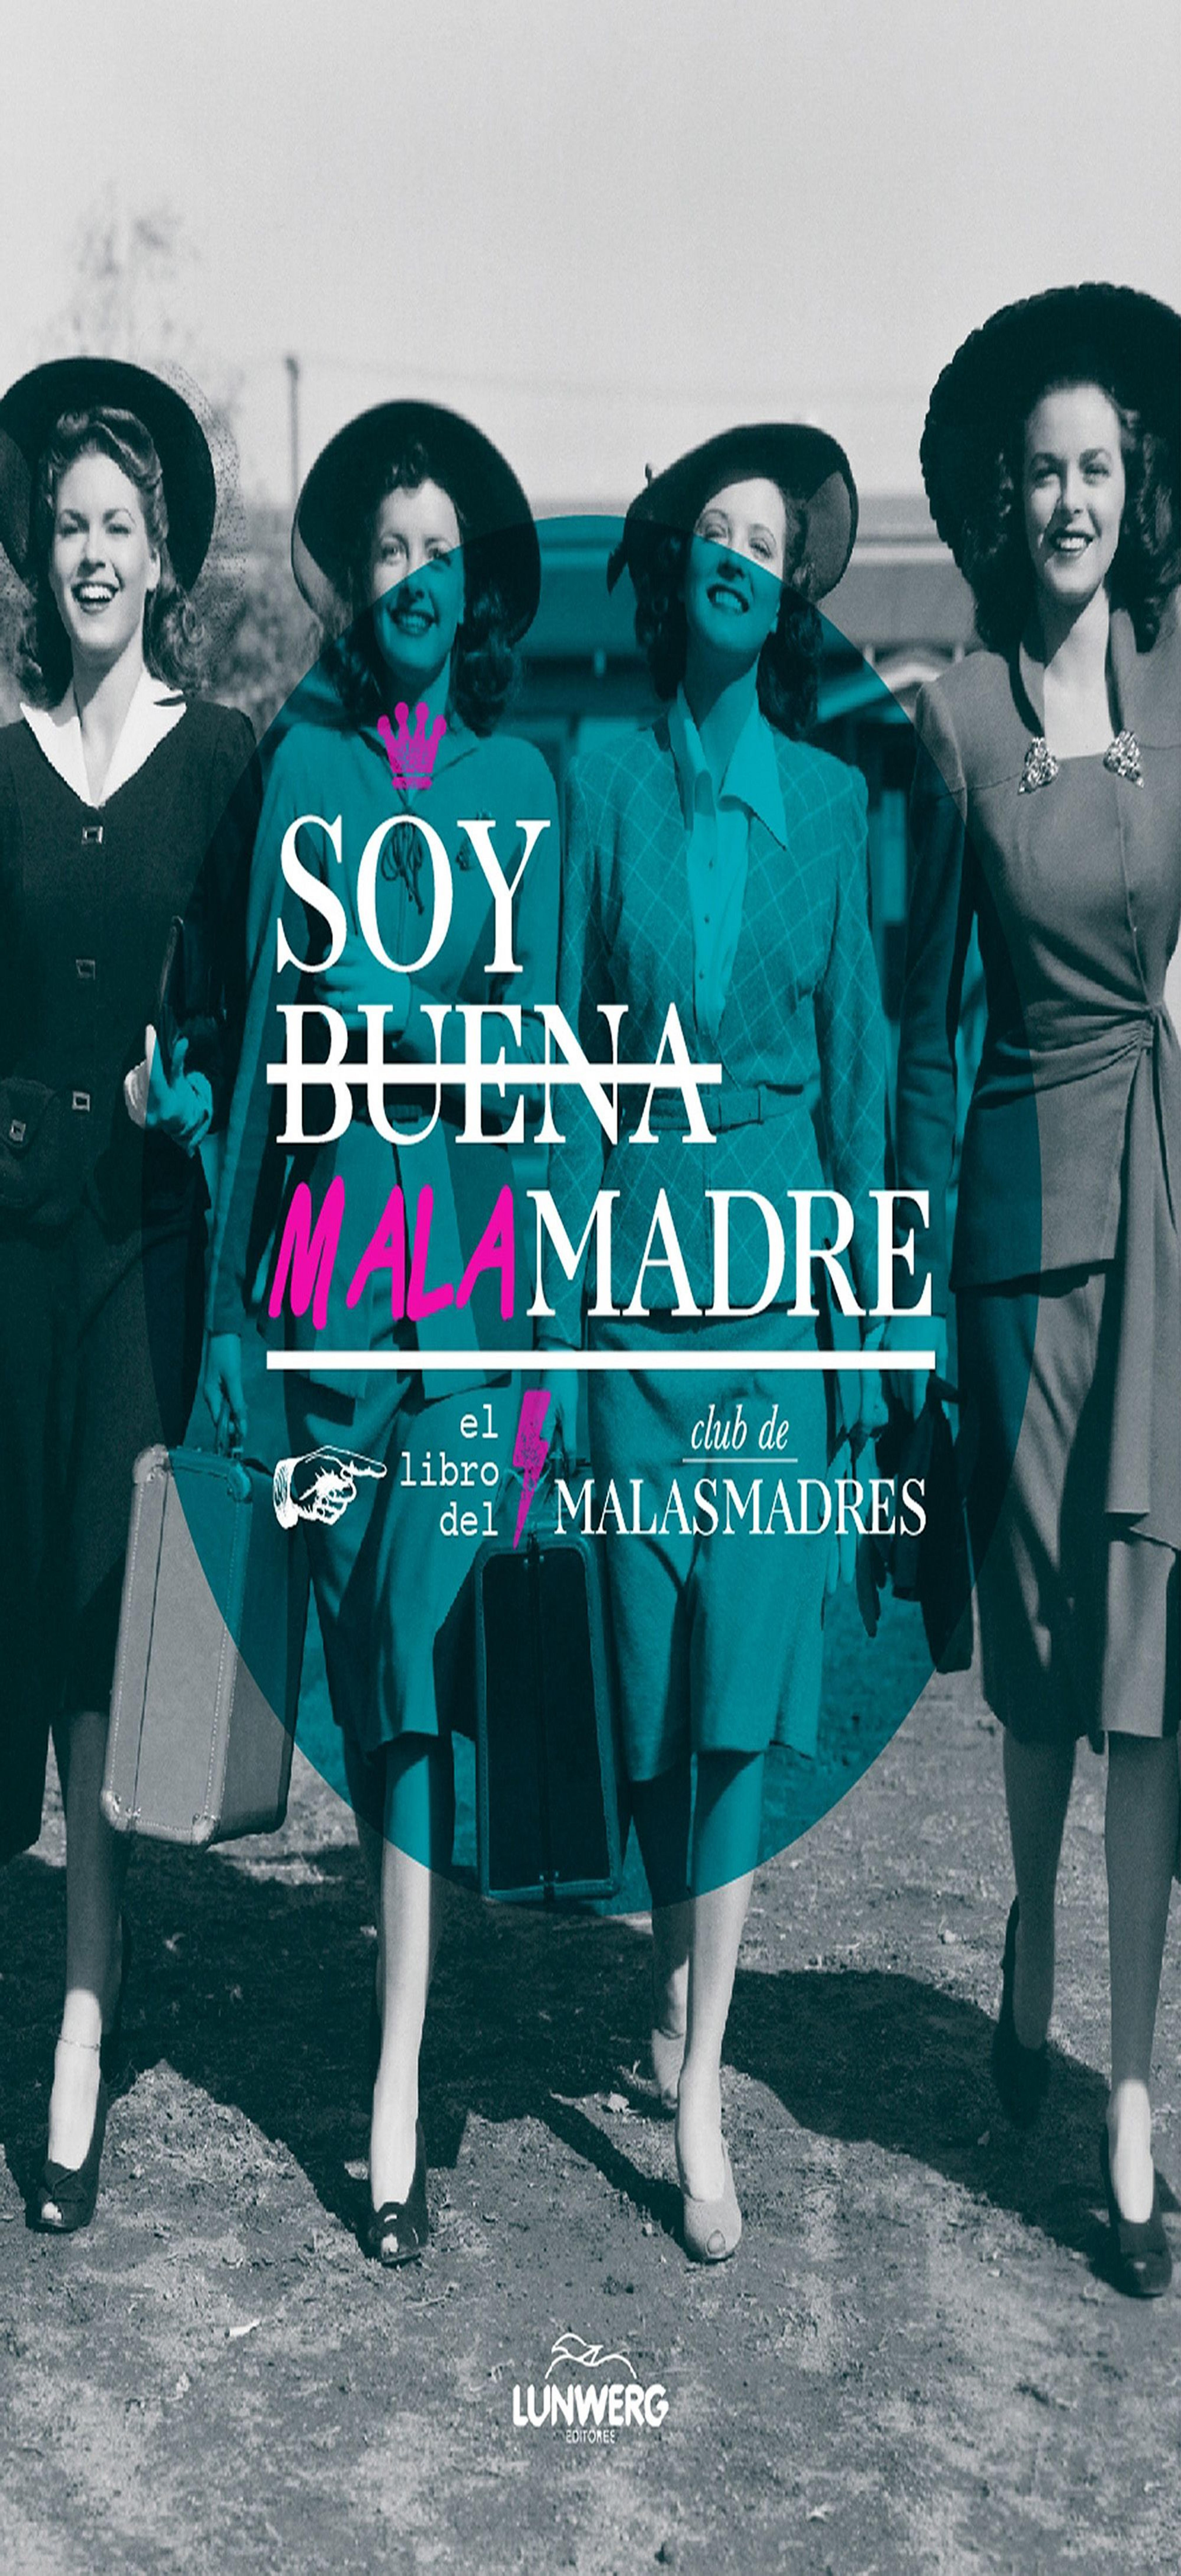 SOY BUENA MALAMADRE - Club de Malasmadres